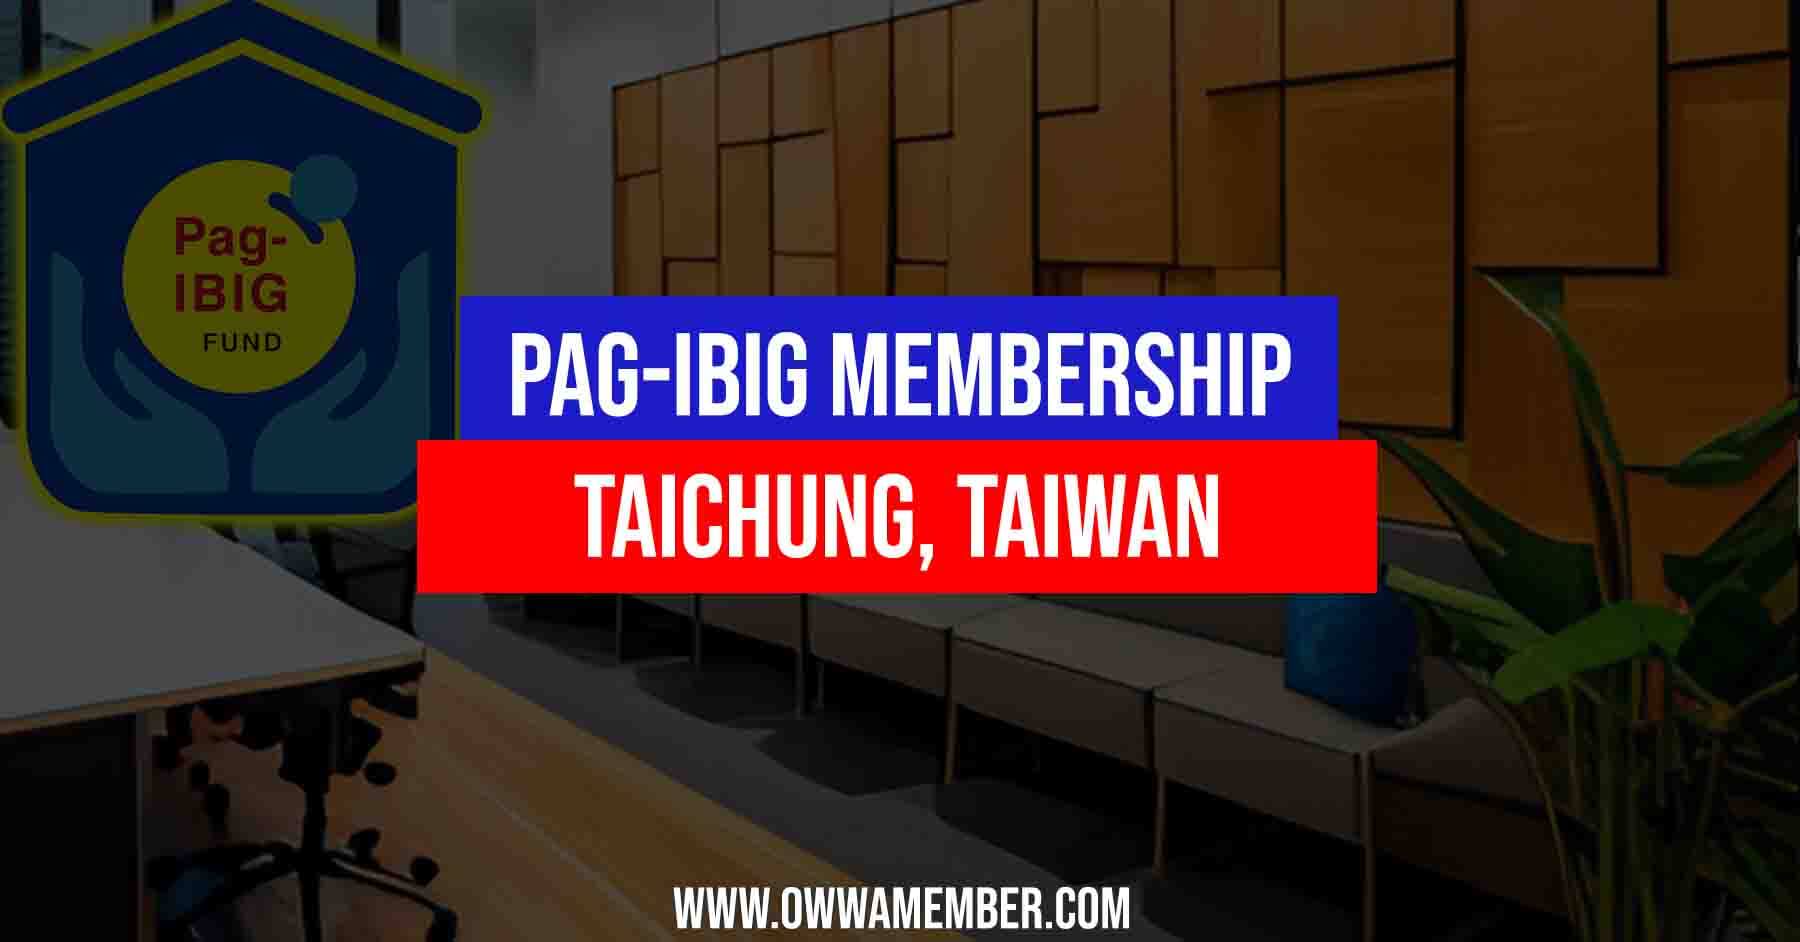 apply pagibig membership taichung taiwan